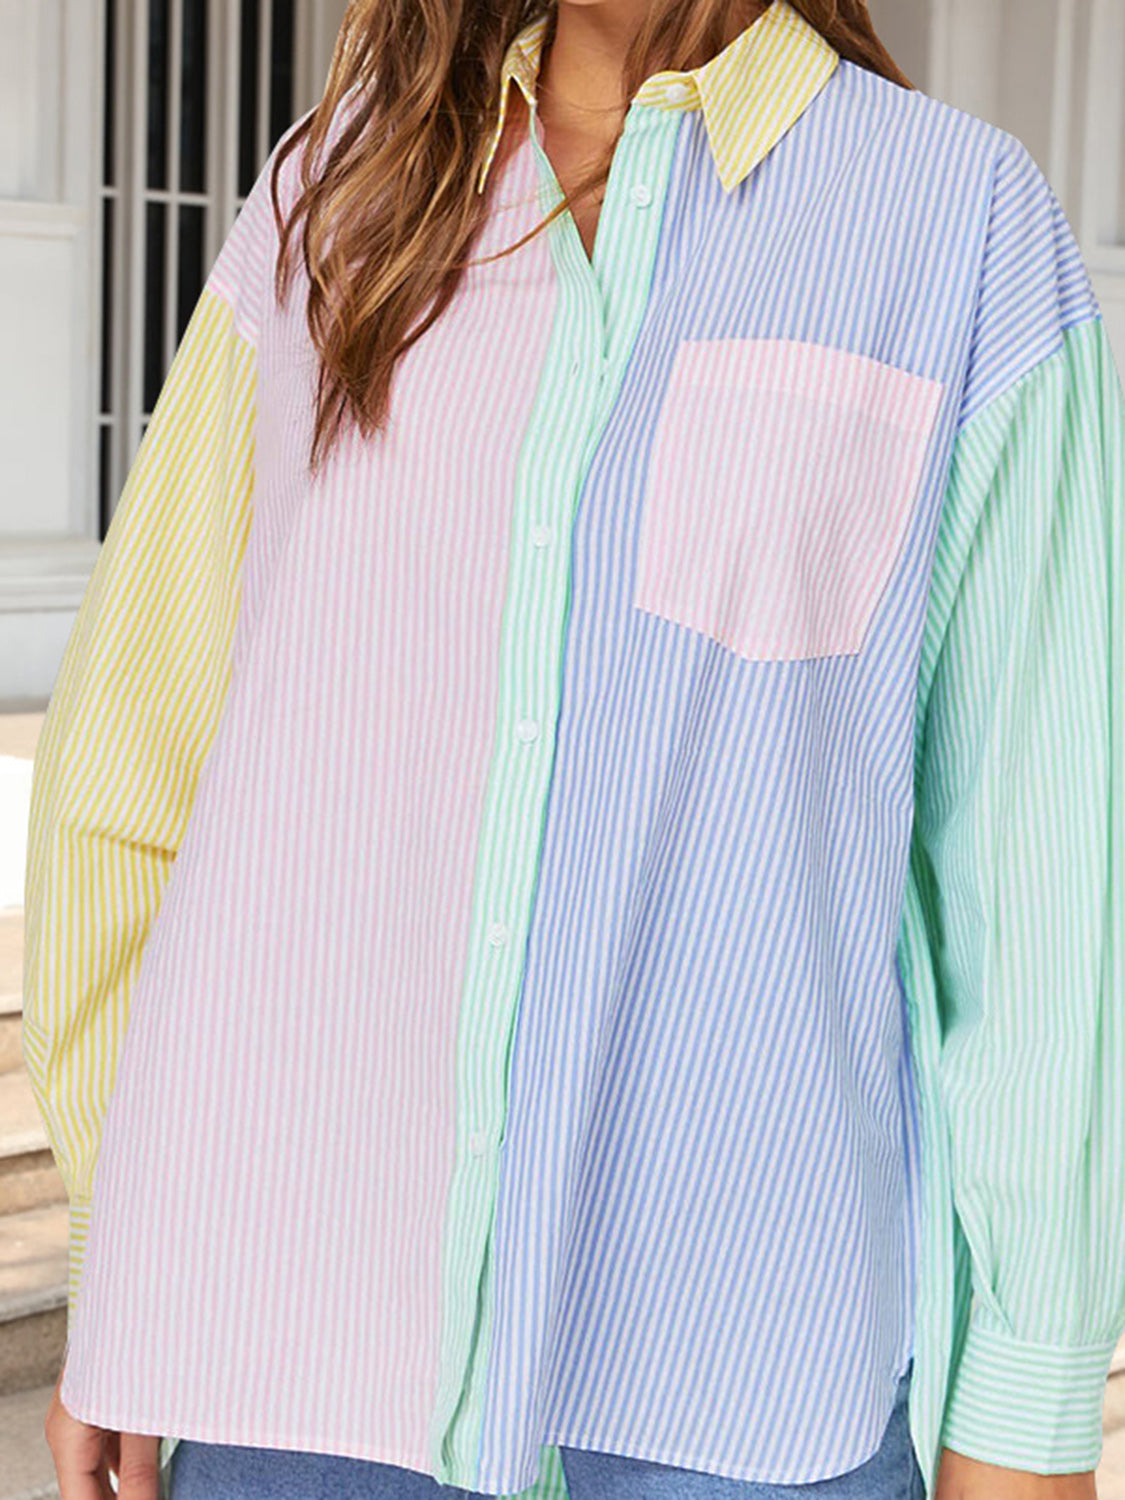 CHGBMOK Womens Color Block Button Down Shirts Long Sleeve